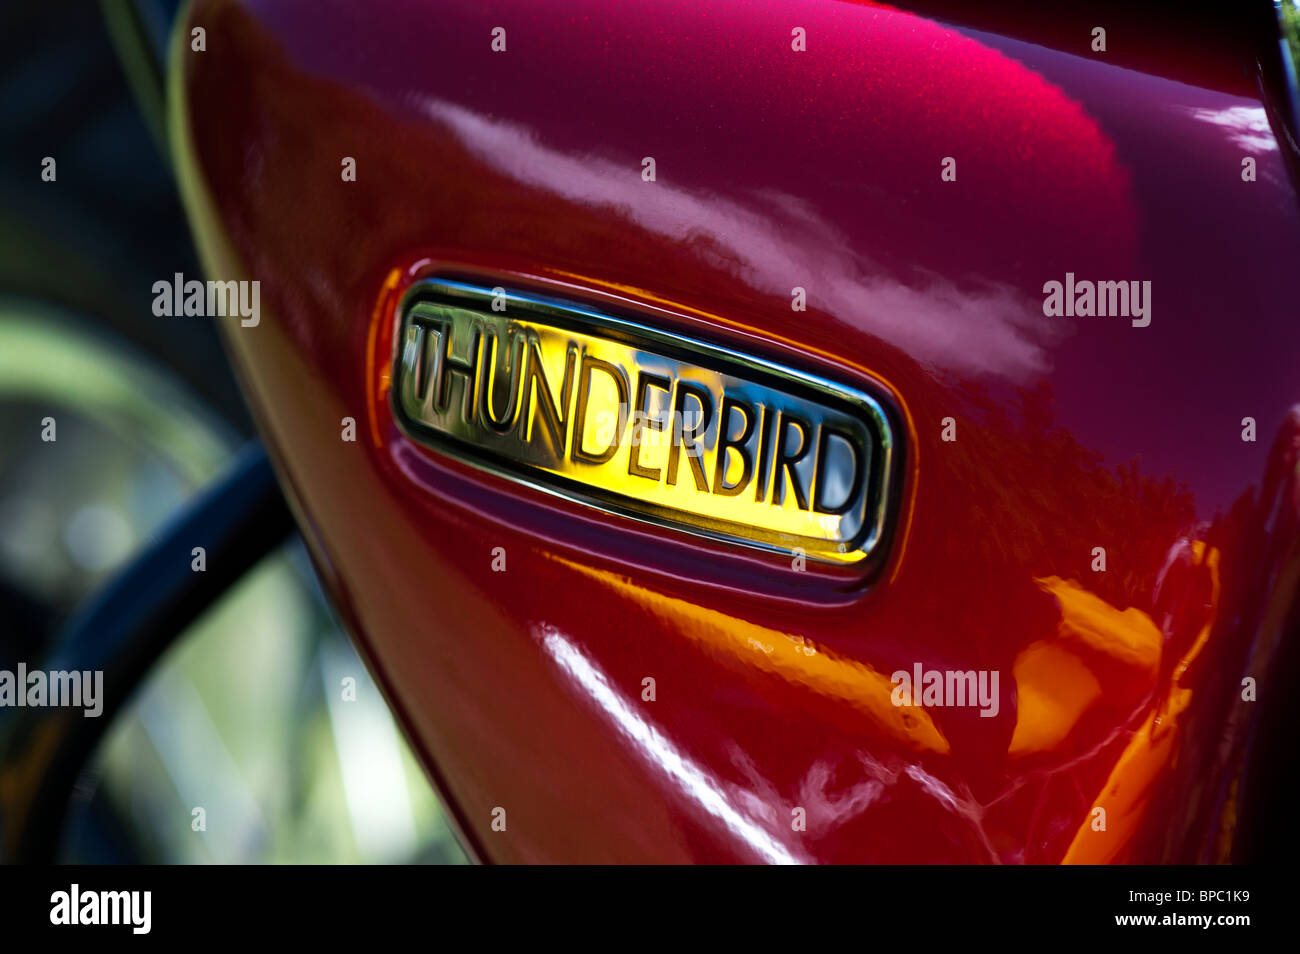 Triumph Thunderbird motorcycle side panel badge , Classic british motorcycle Stock Photo